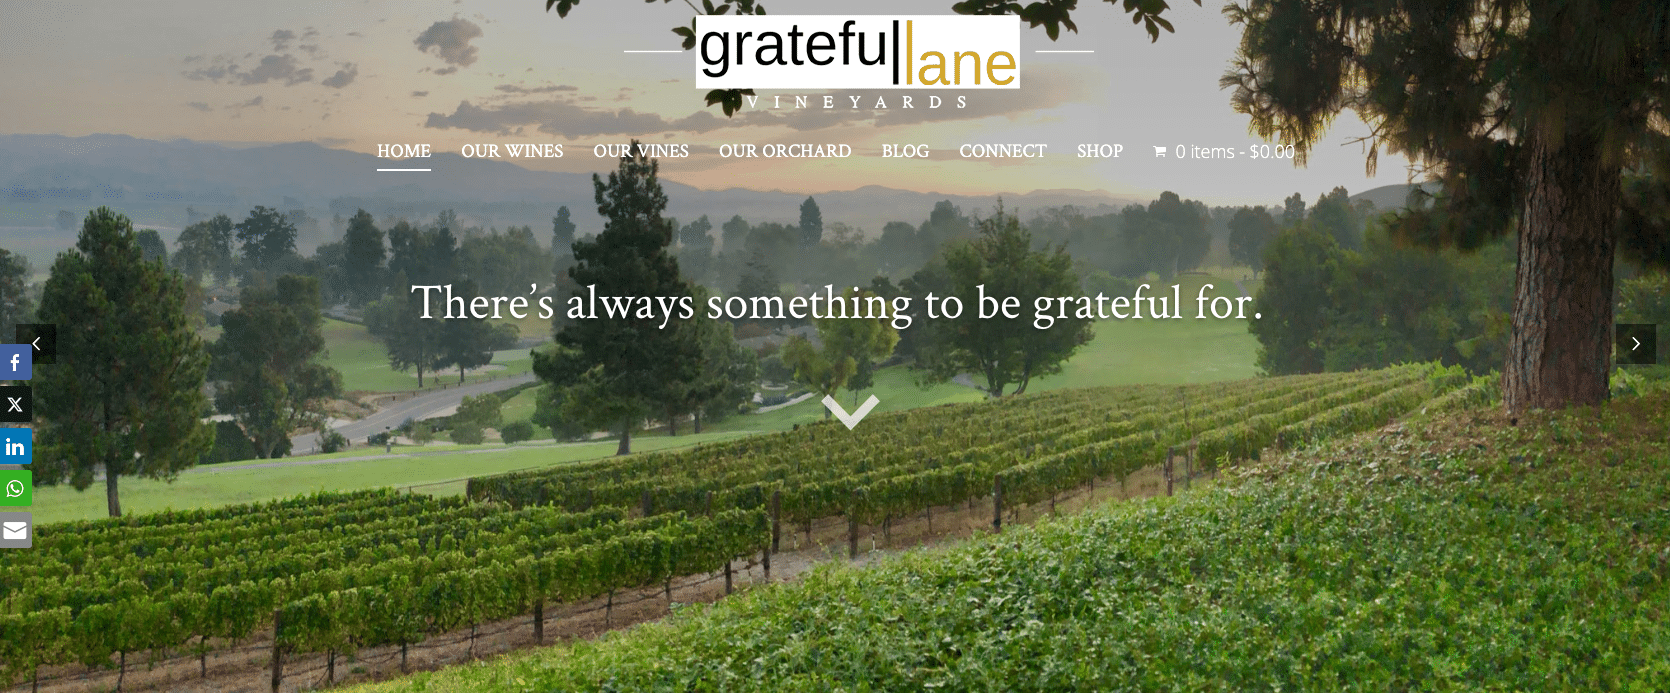 Grateful Lane Website Design